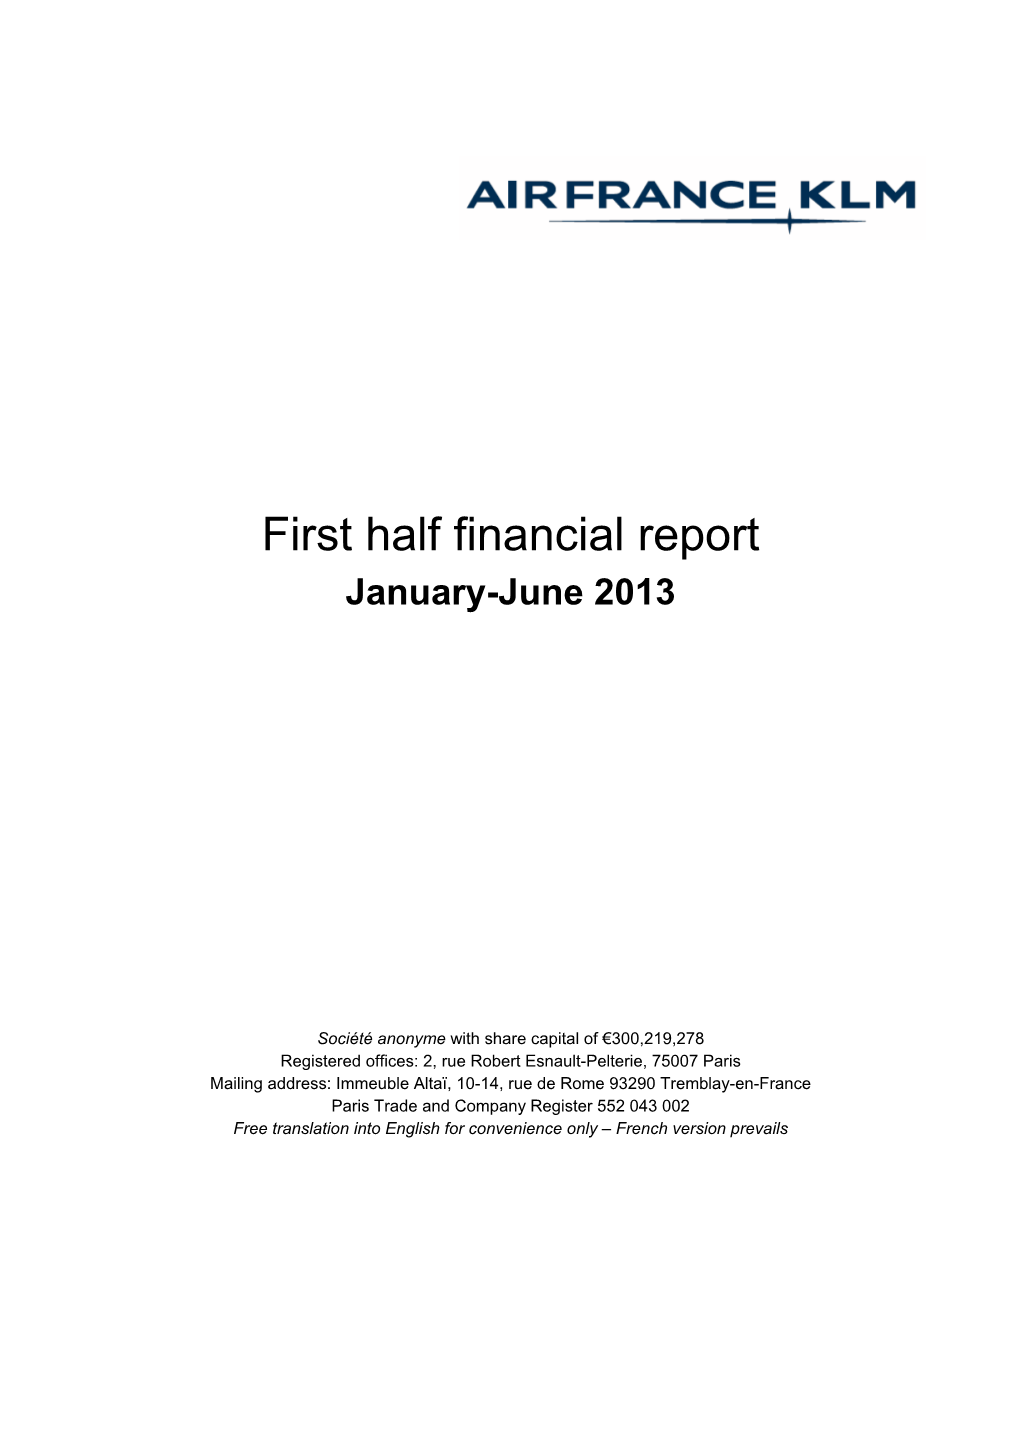 First Half Financial Report January-June 2013